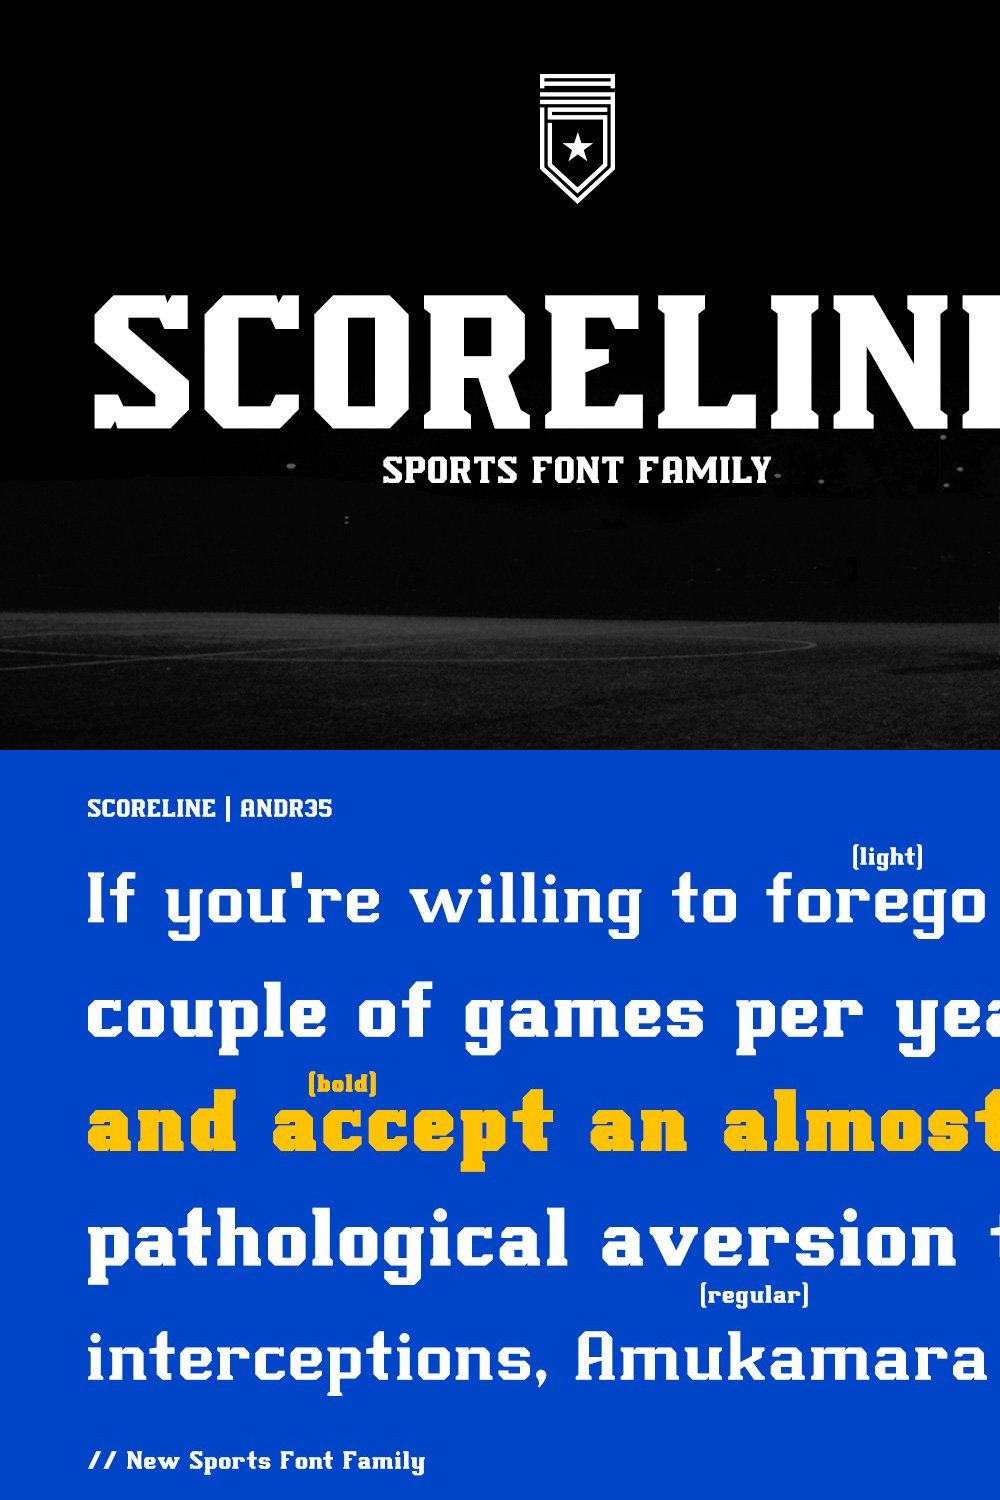 Scoreline Sports Font Family pinterest preview image.